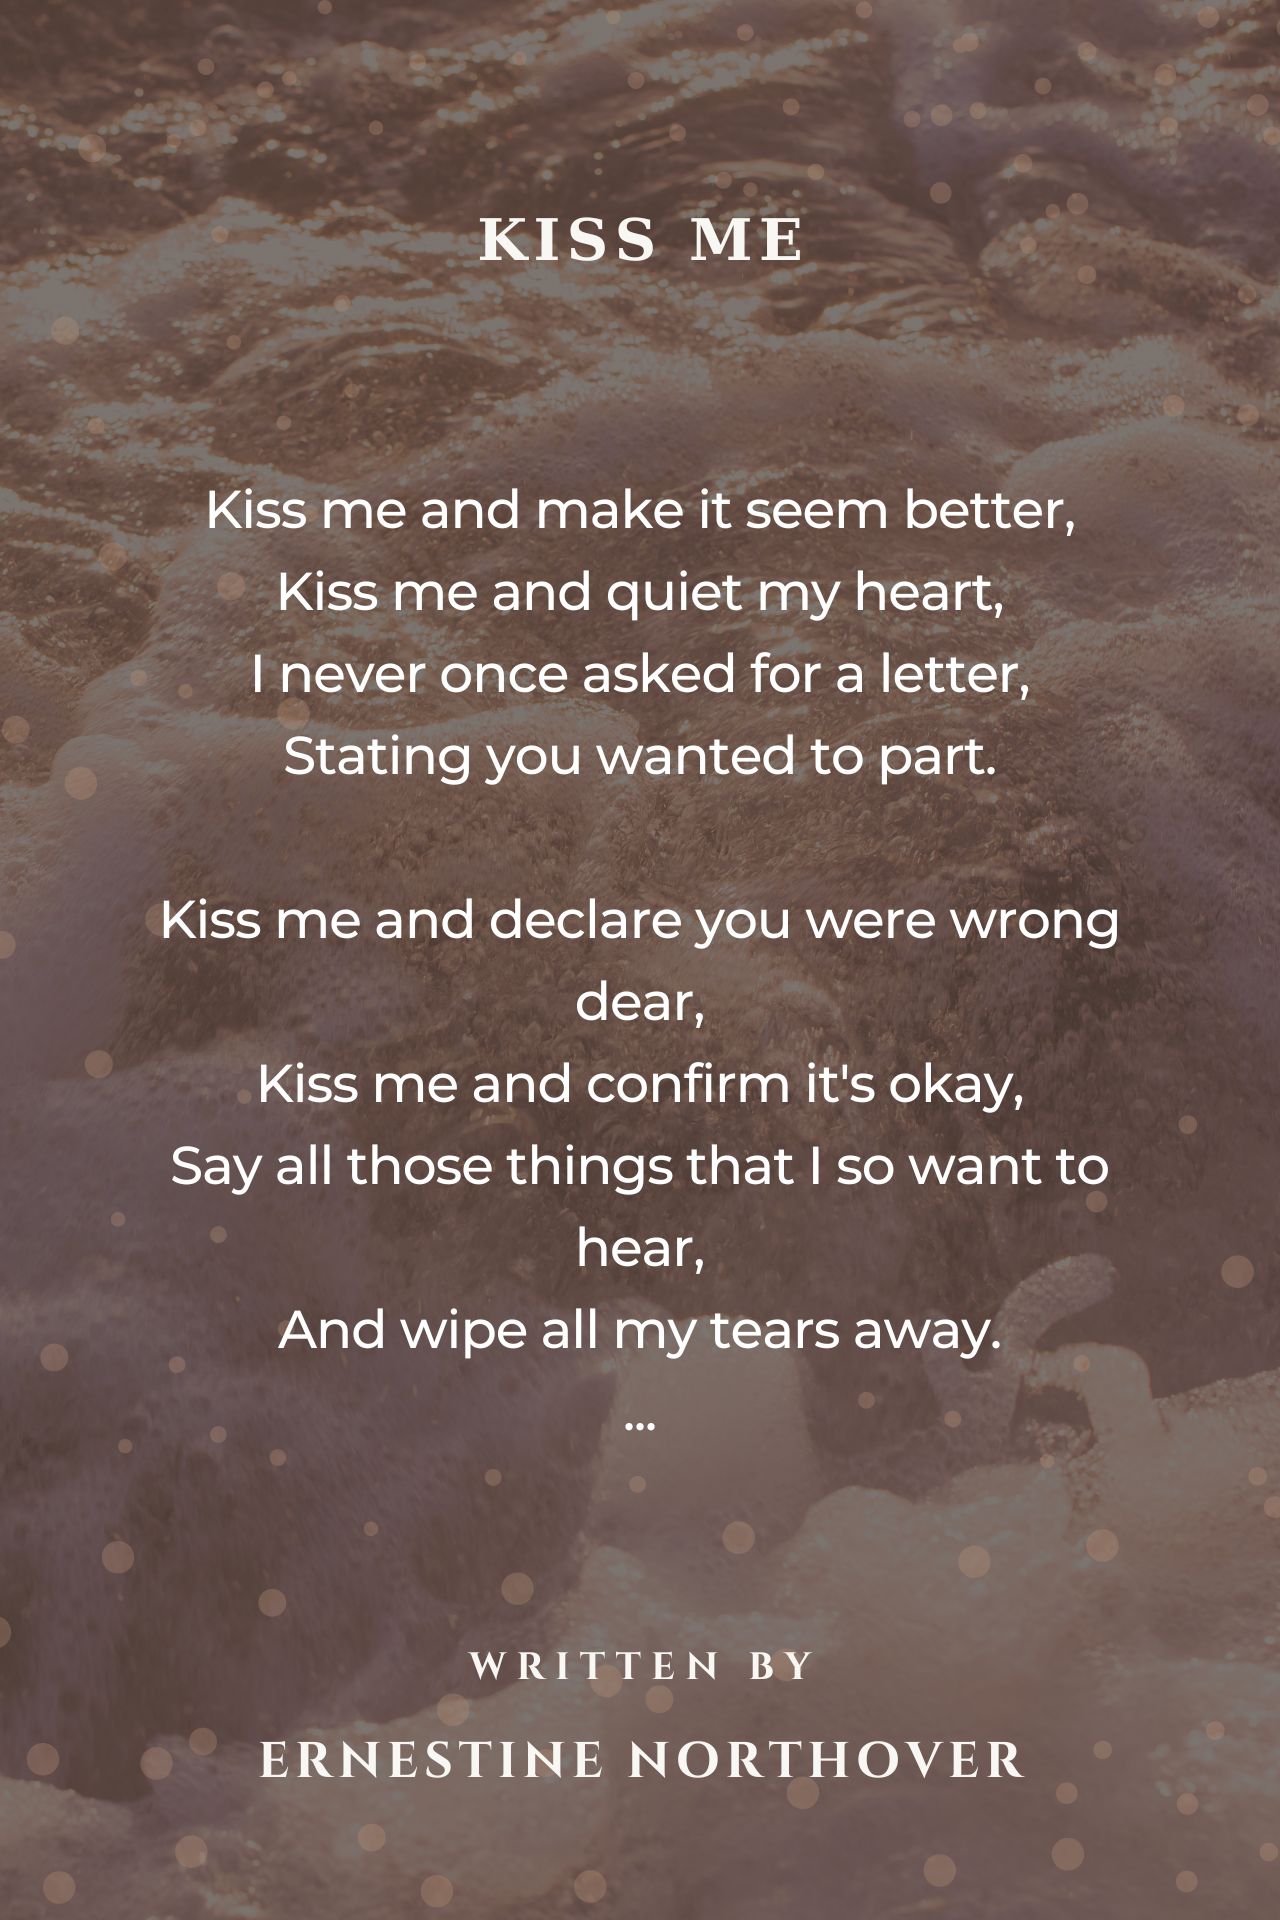 Kiss Me - Kiss Me Poem by Ernestine Northover